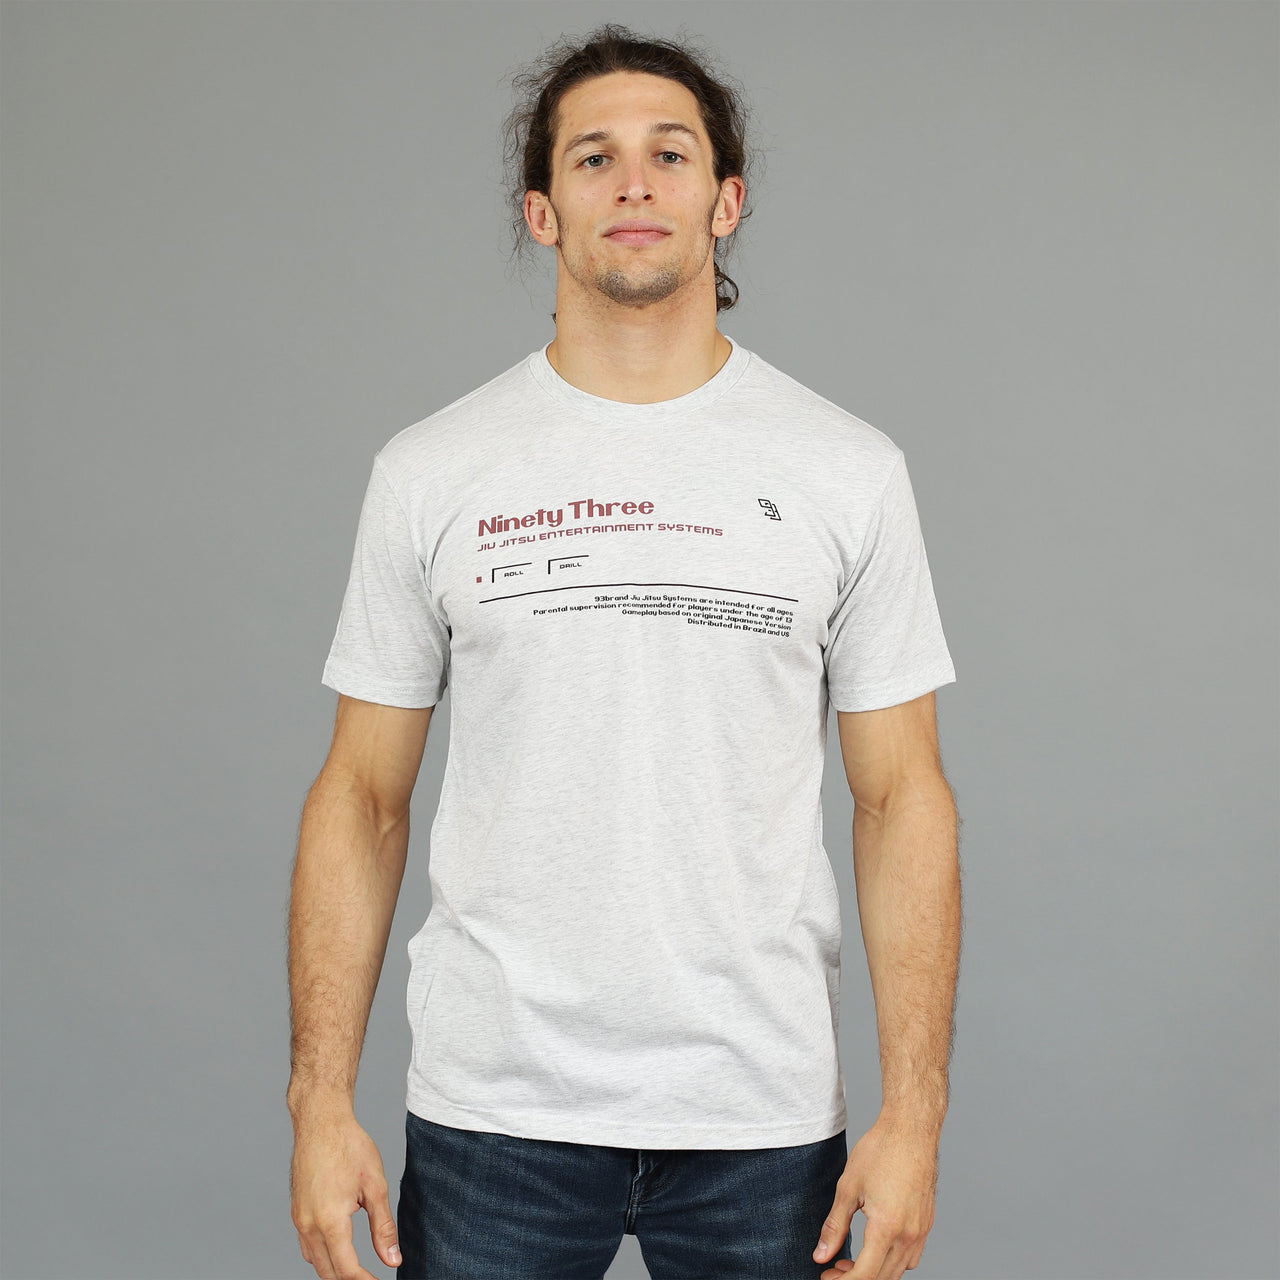 93brand "Console" T-Shirt